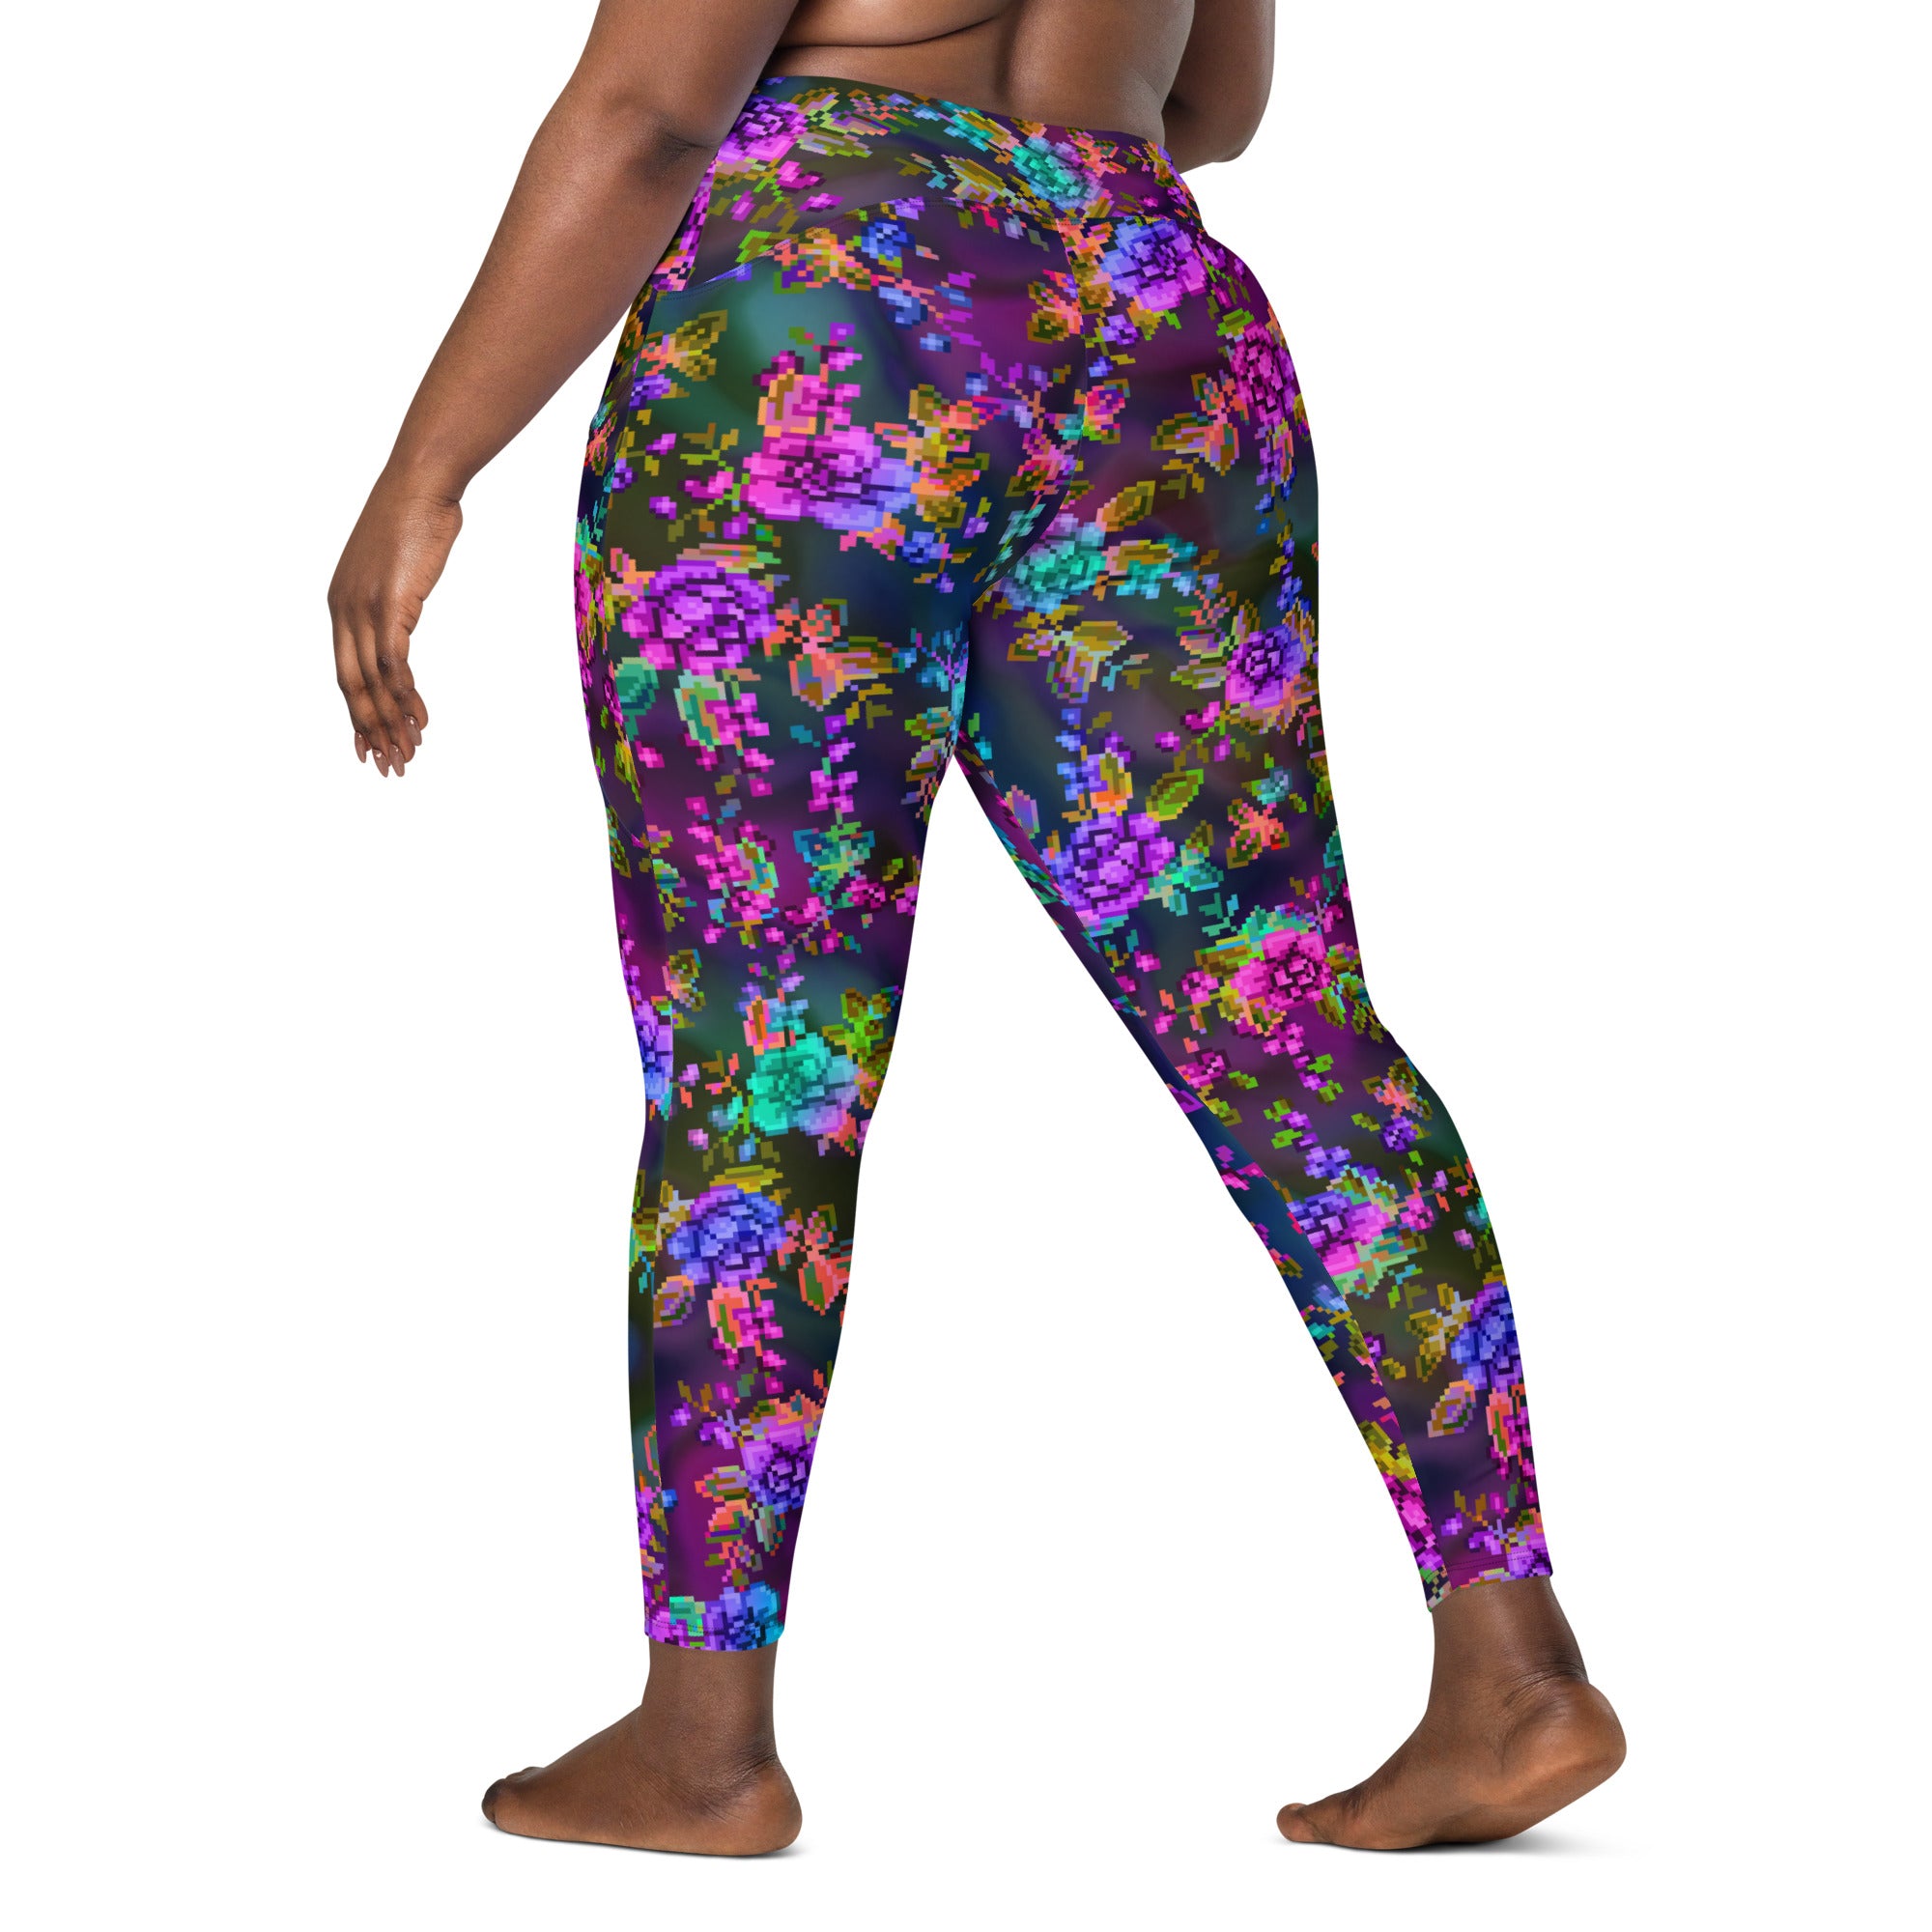 Black peach skin leggings with a multicolored floral print